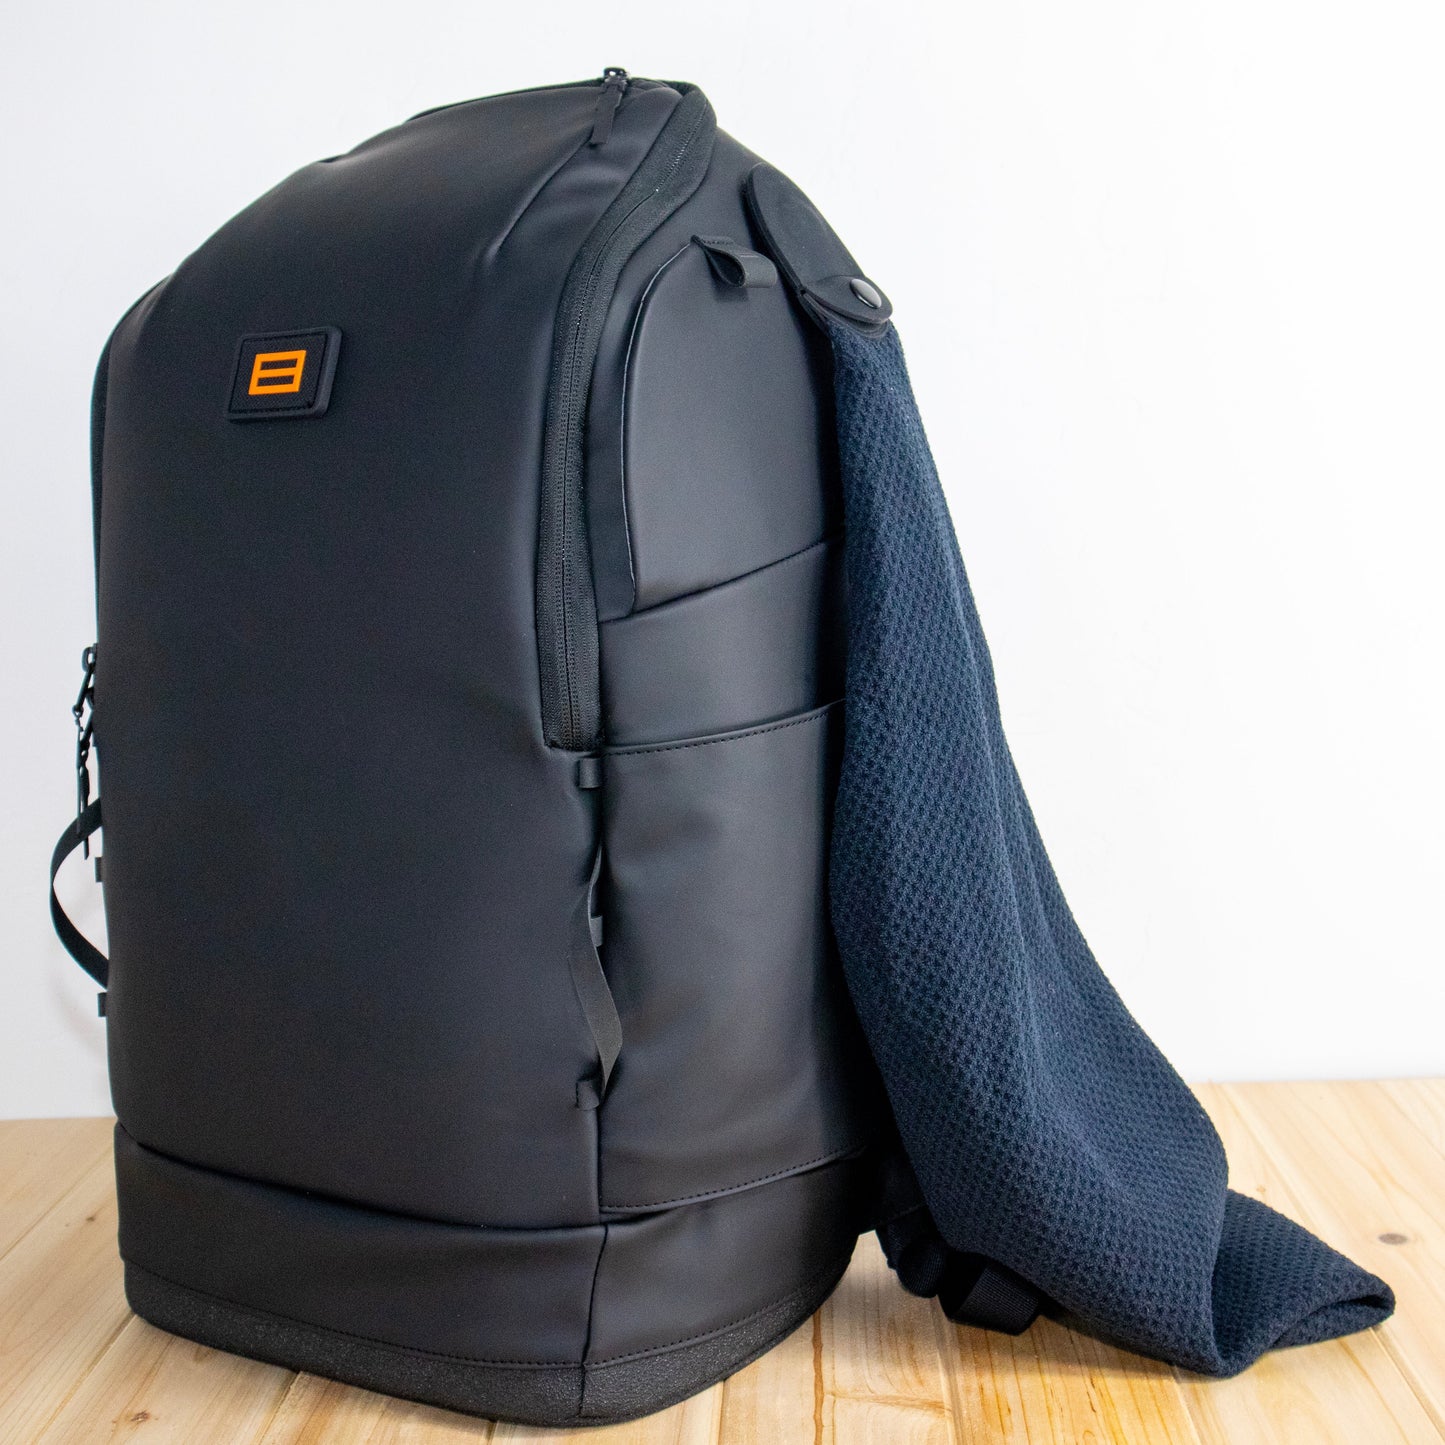 Court Caddy Pickleball Bag (Pre-Order) - KTCHN Pickleball Backpacks